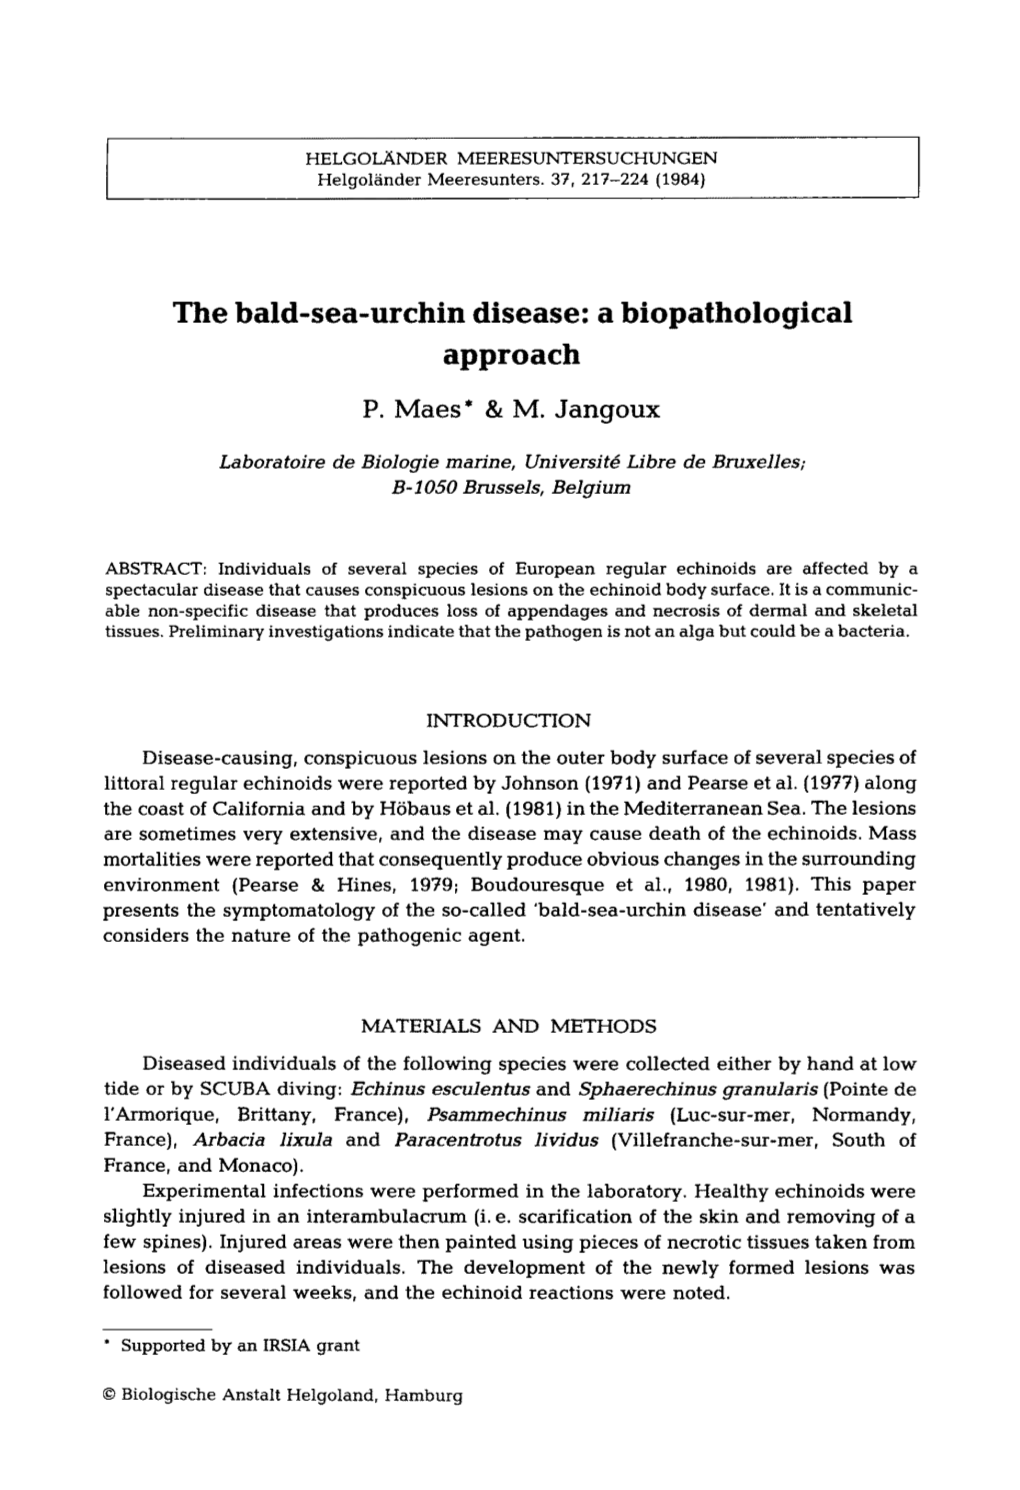 The Bald-Sea-Urchin Disease: a Biopathological Approach